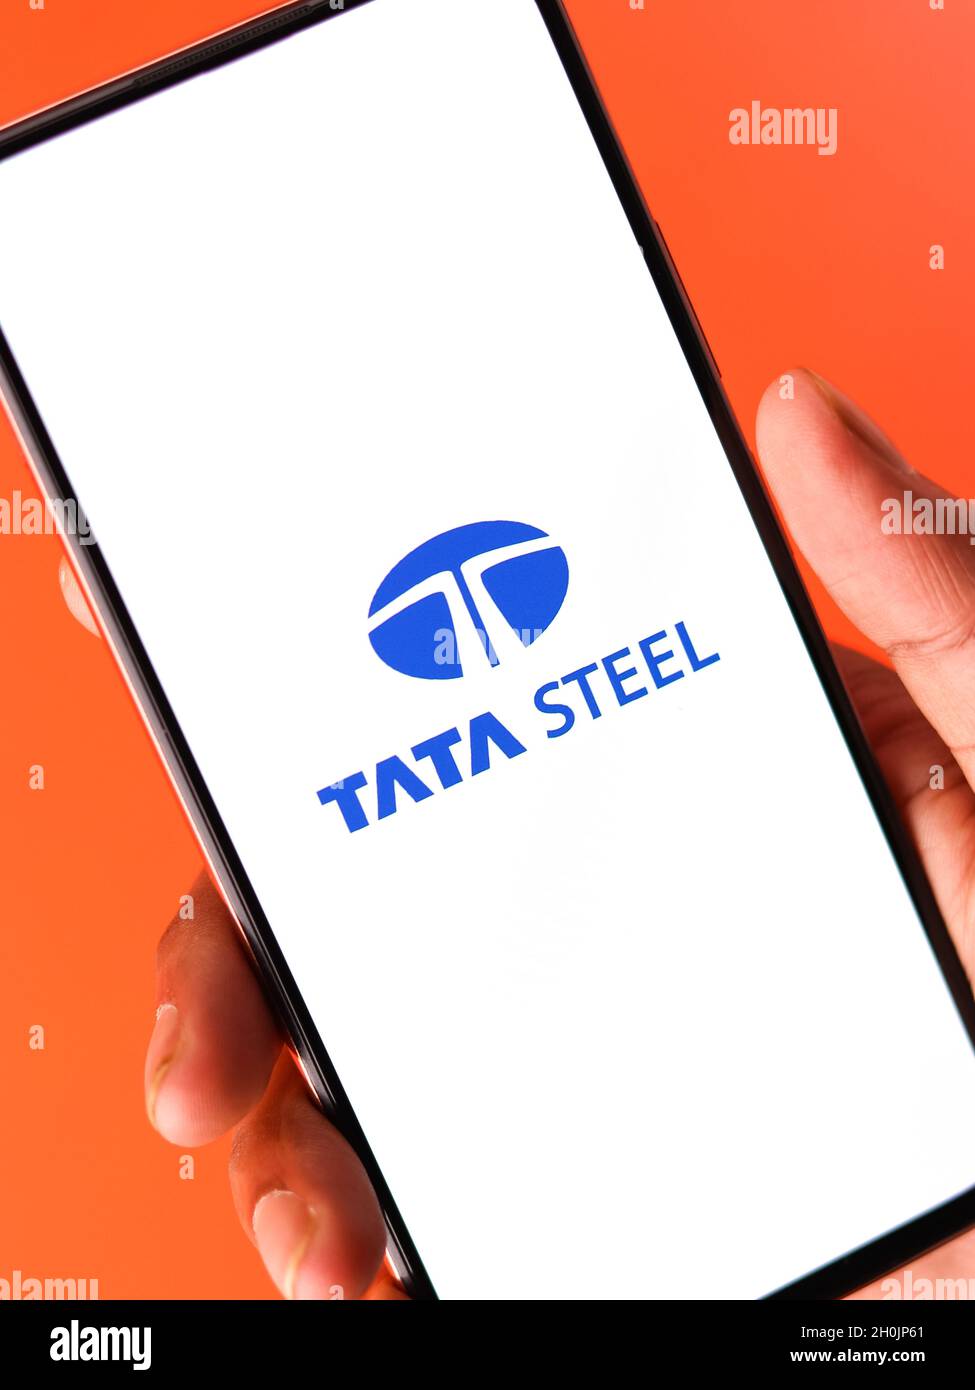 tata-steel-logo (1) –